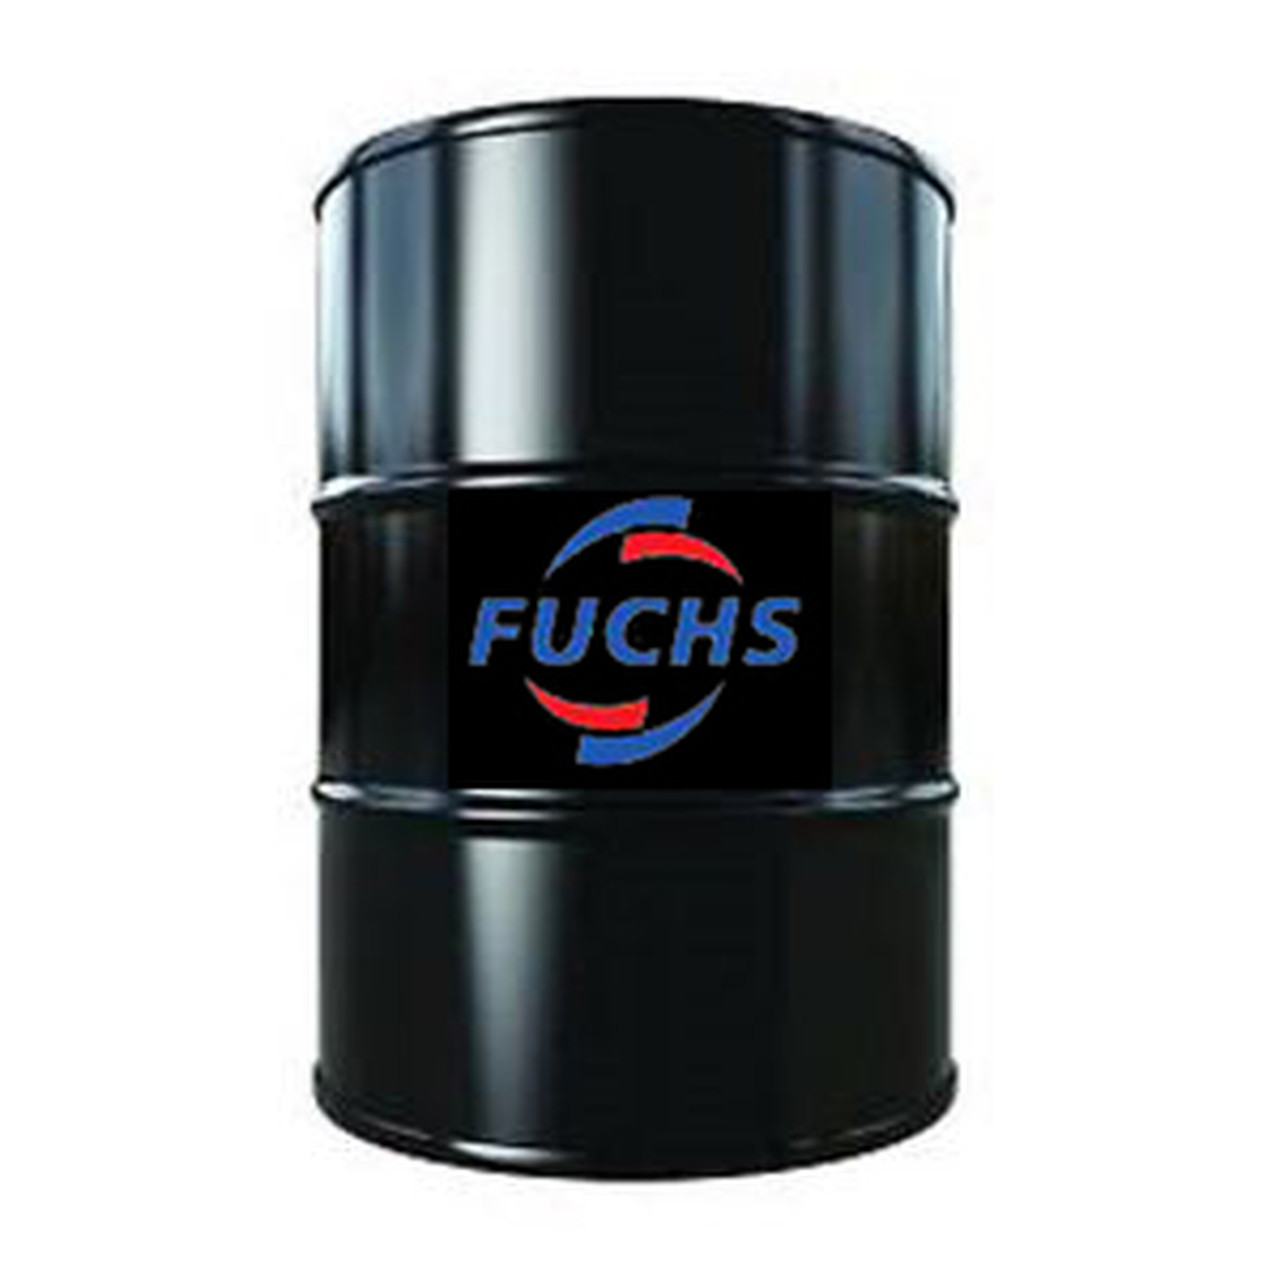 Fuchs FM Gear Oil 220  - 55 Gallon Drum